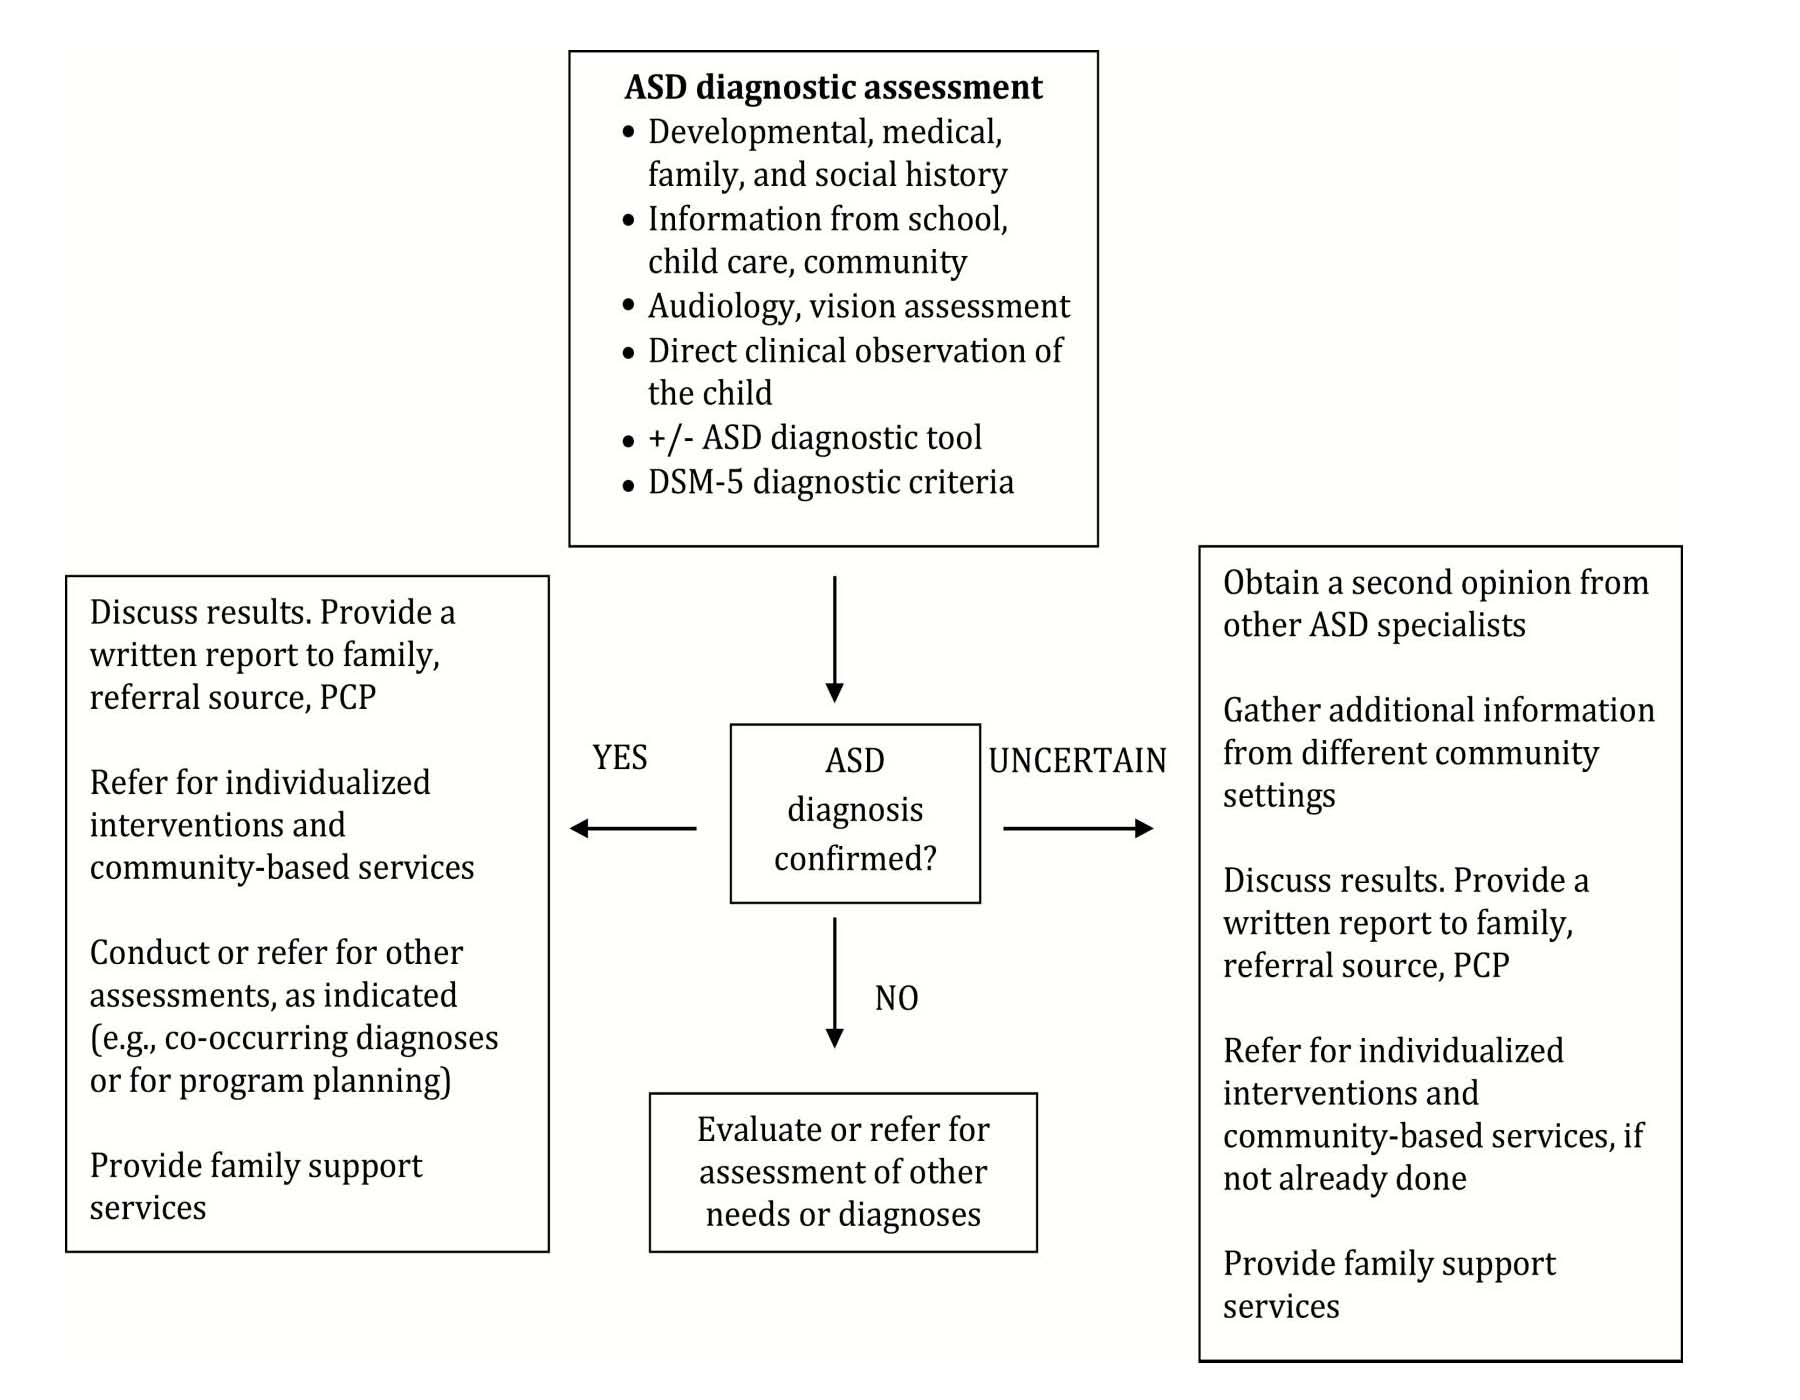 Standards of diagnostic assessment for autism spectrum disorder